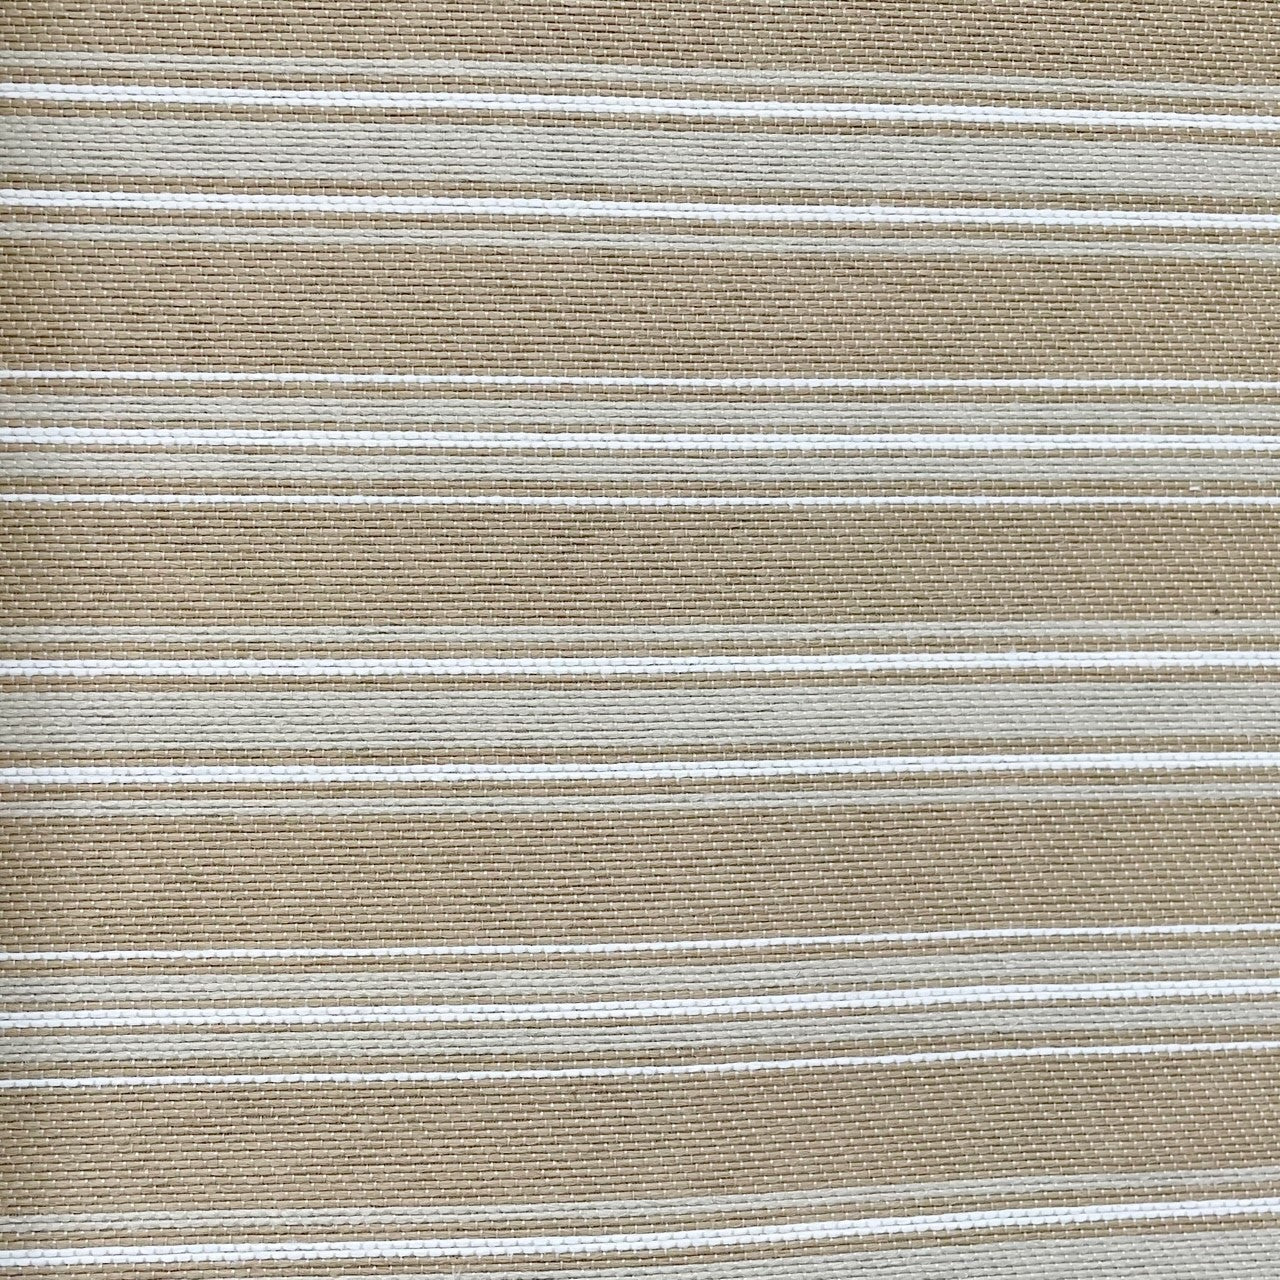 Fabric Swatch - Outdoor Sand Stripe